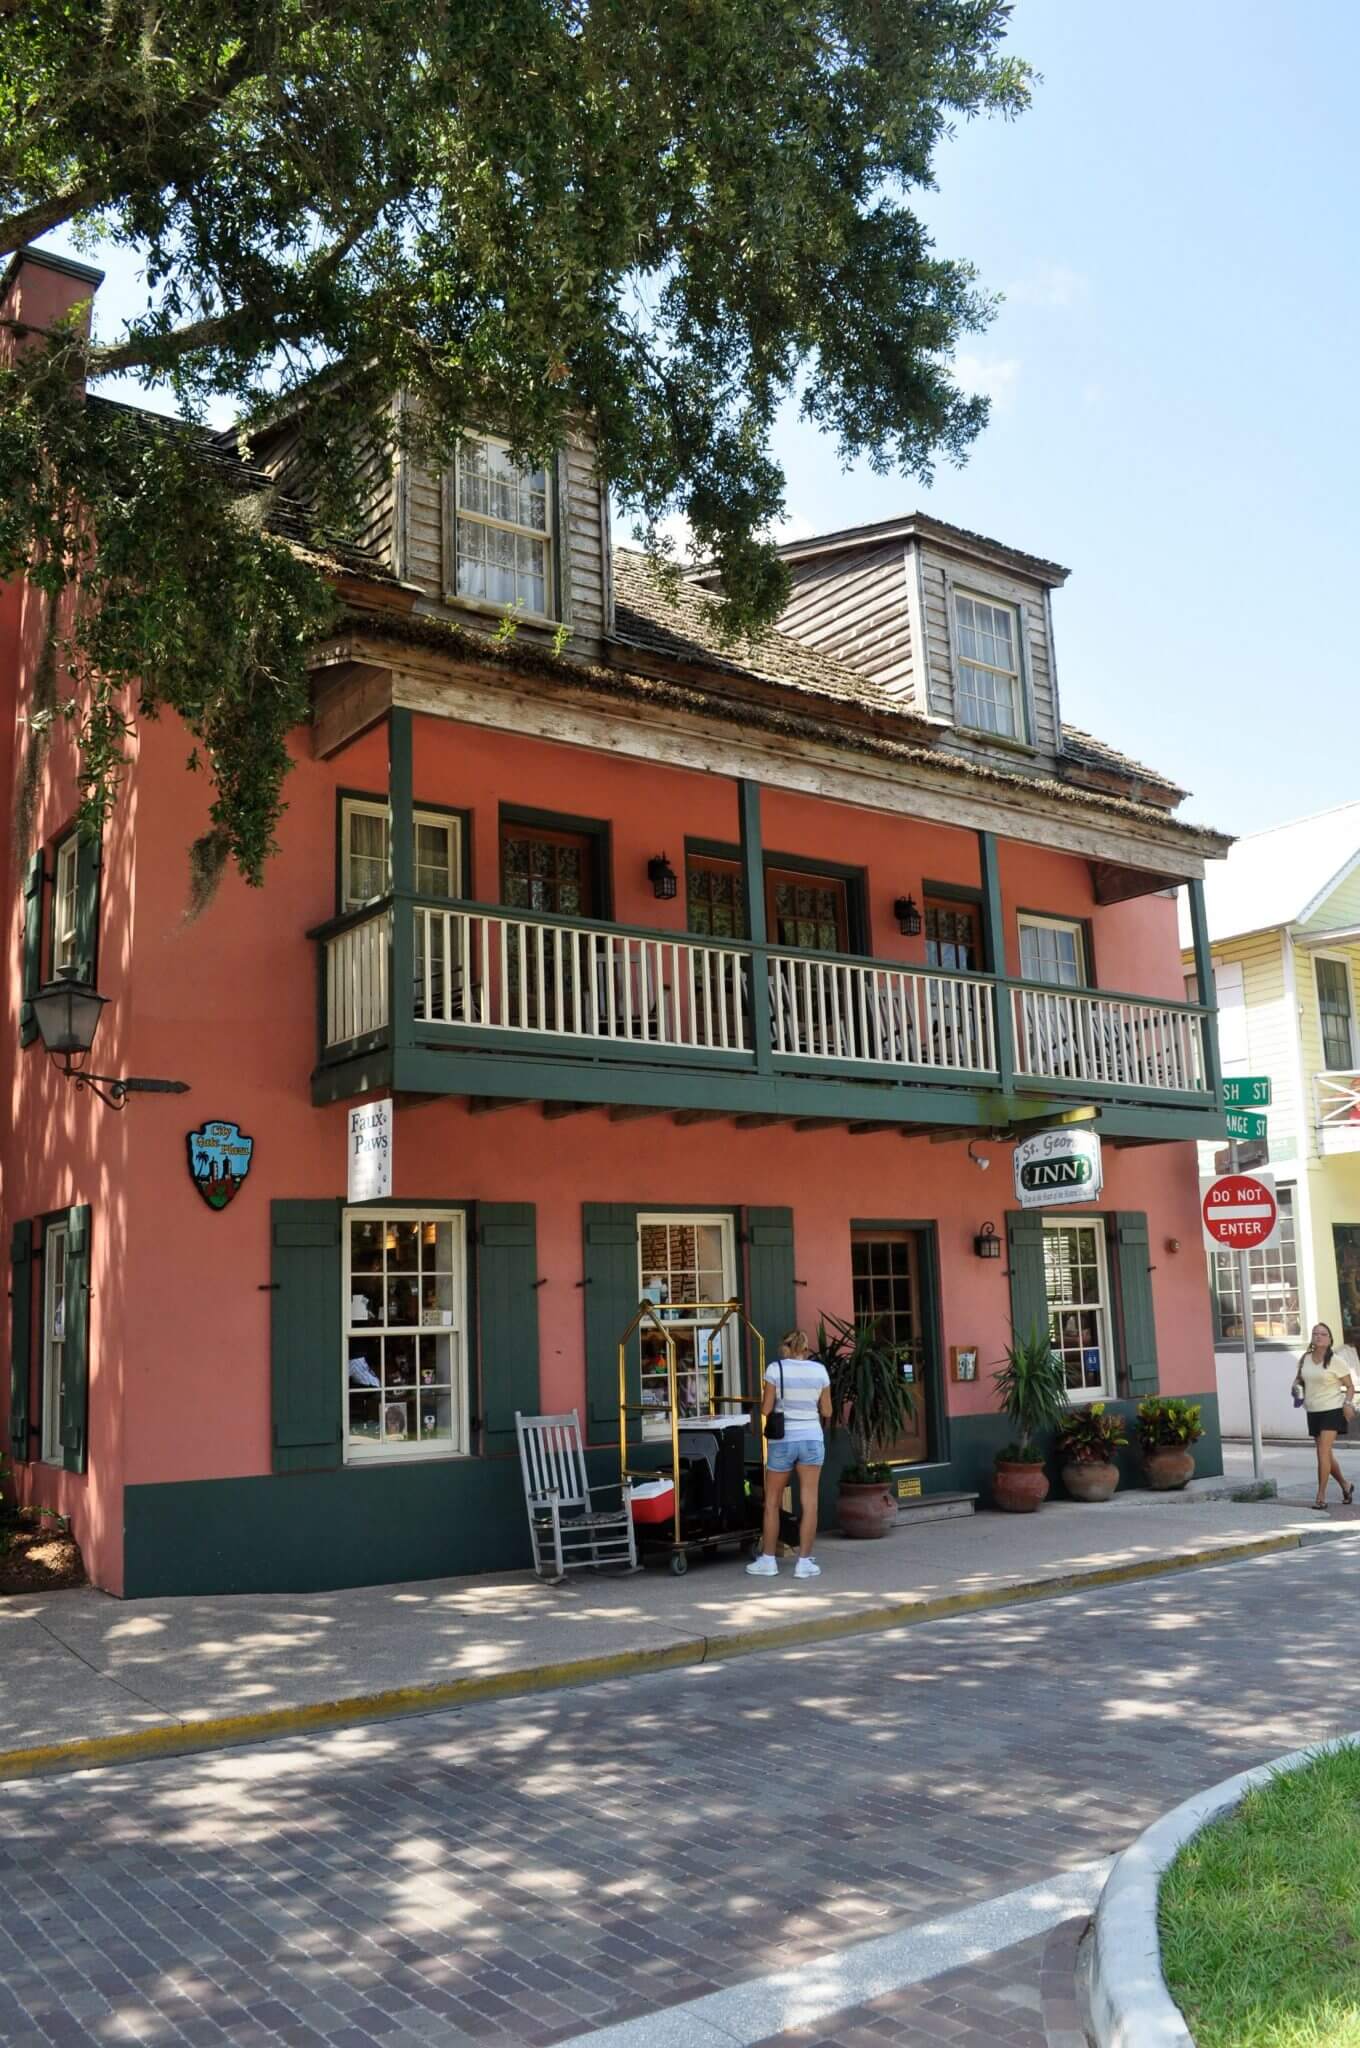 St. George Inn in St. Augustine, Florida. 